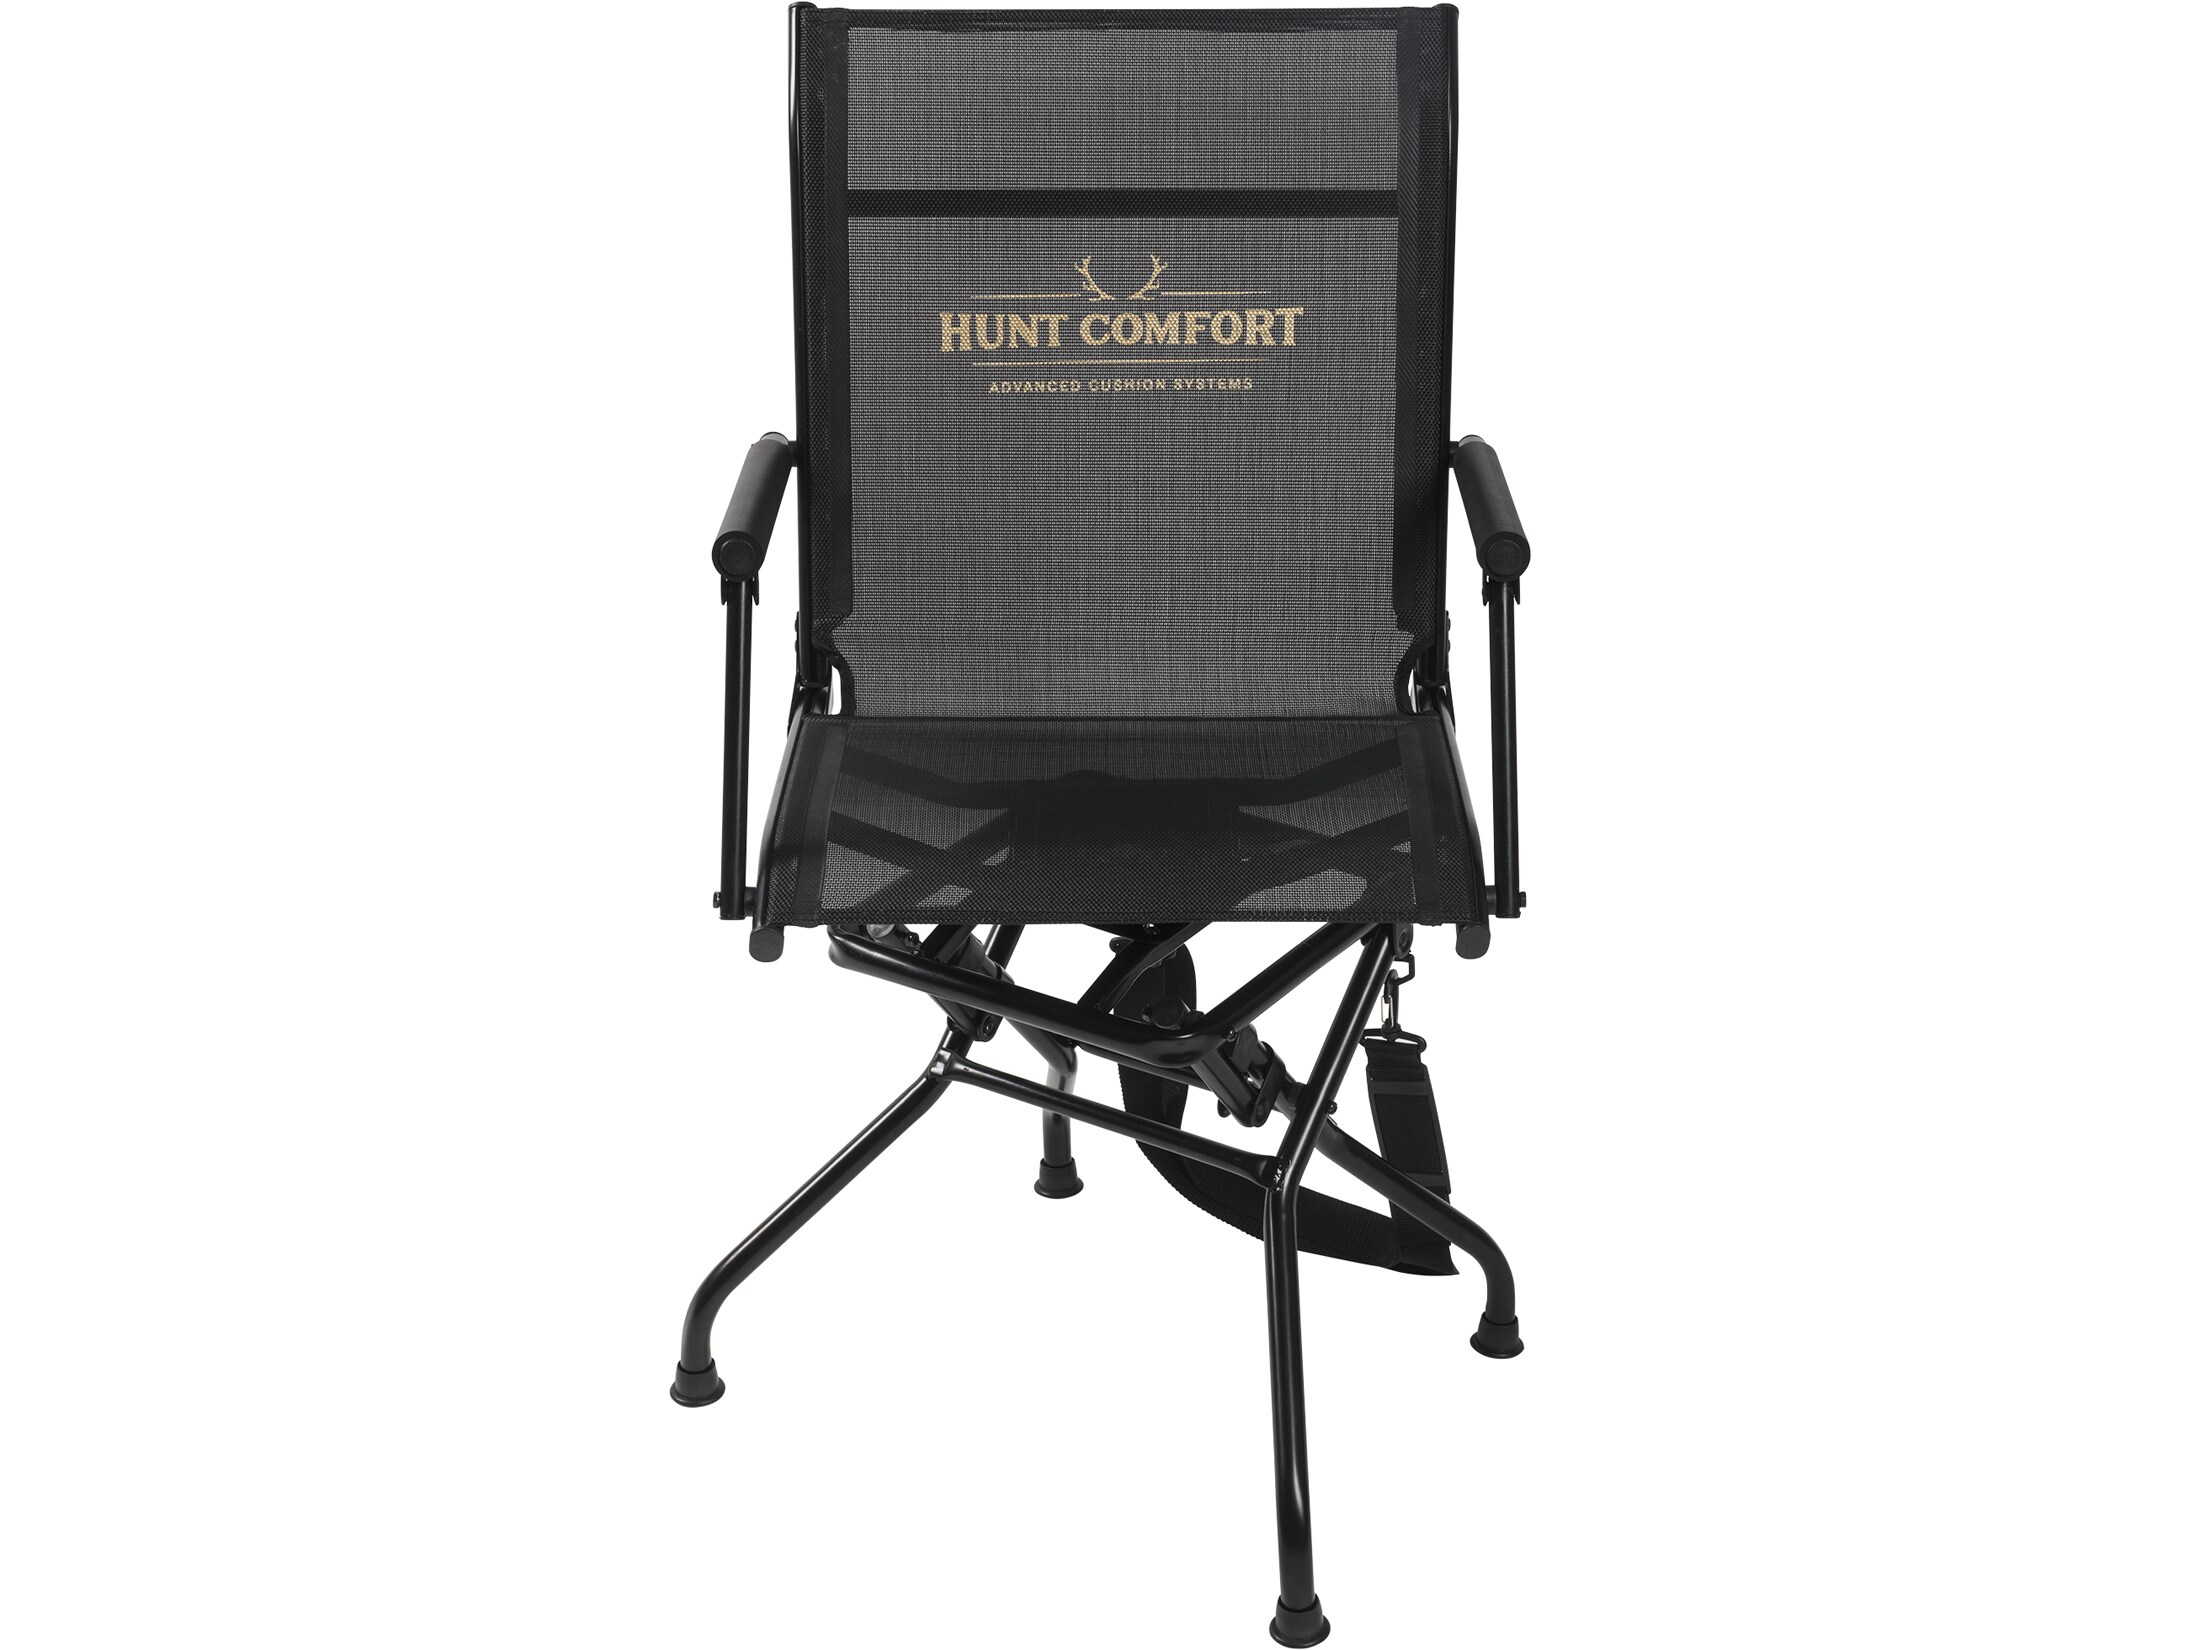 Hunt Comfort Multi Position Mesh Lite Swivel Hunting Chair HCCC10 for sale online 